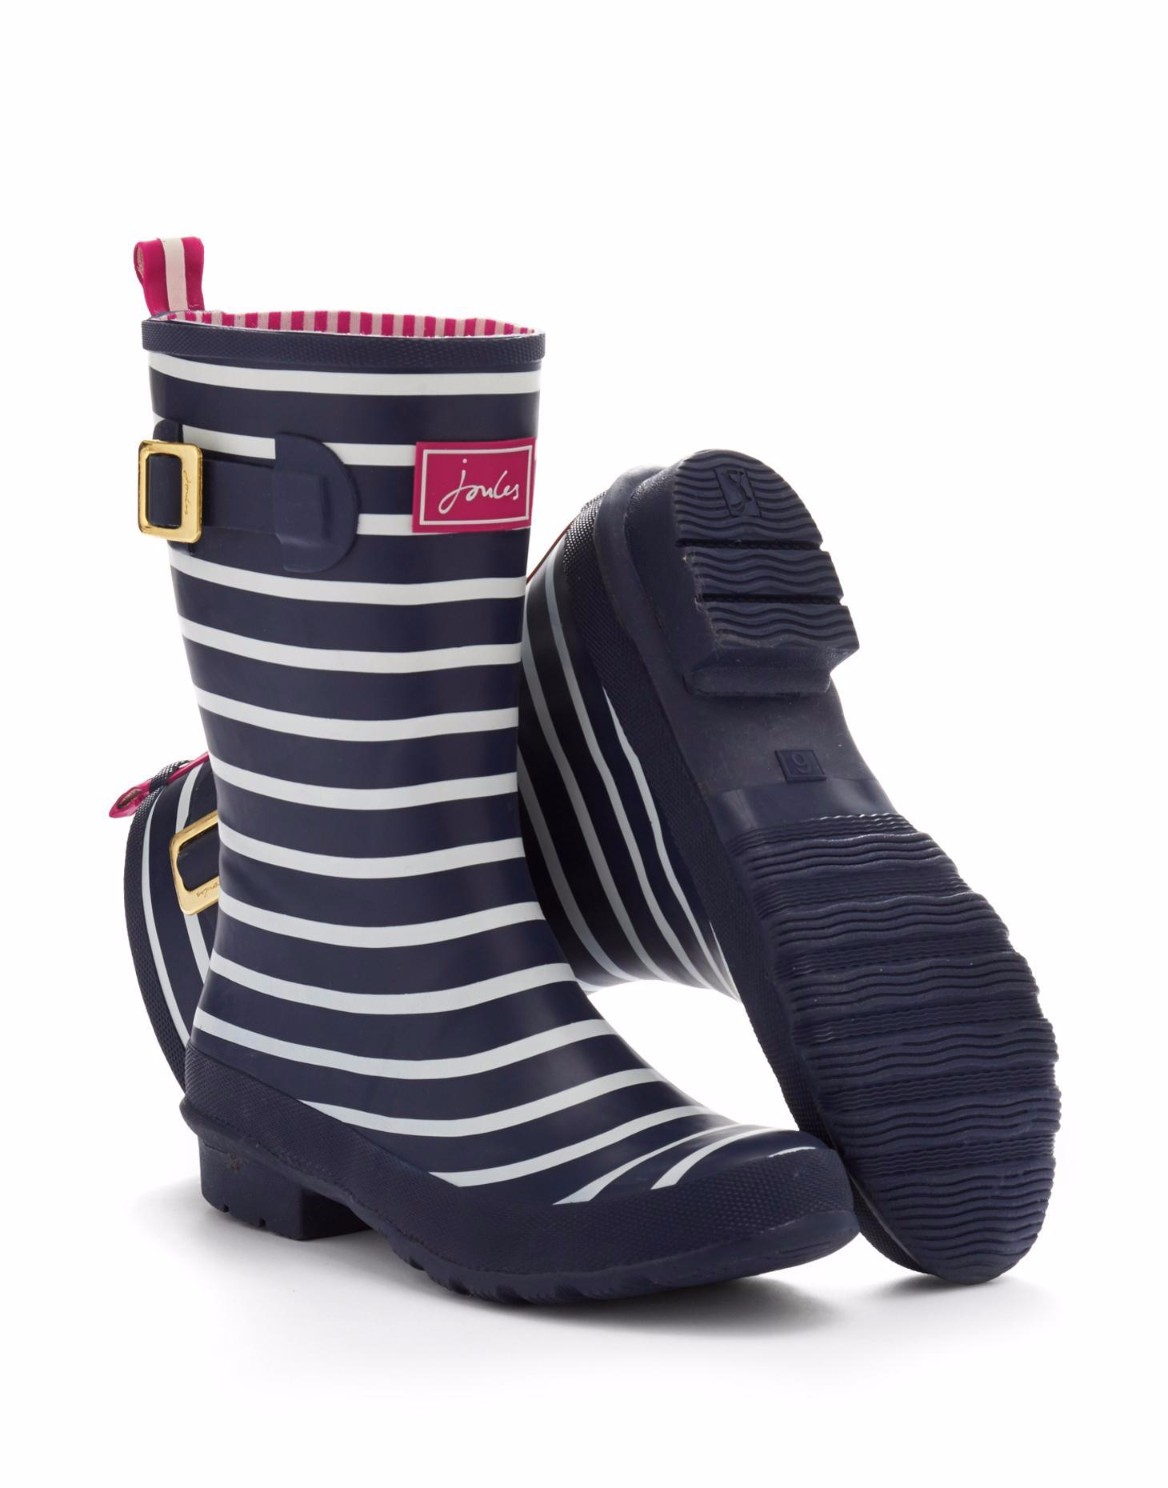 Mid Calf Rain Boots for Women - Online Boots